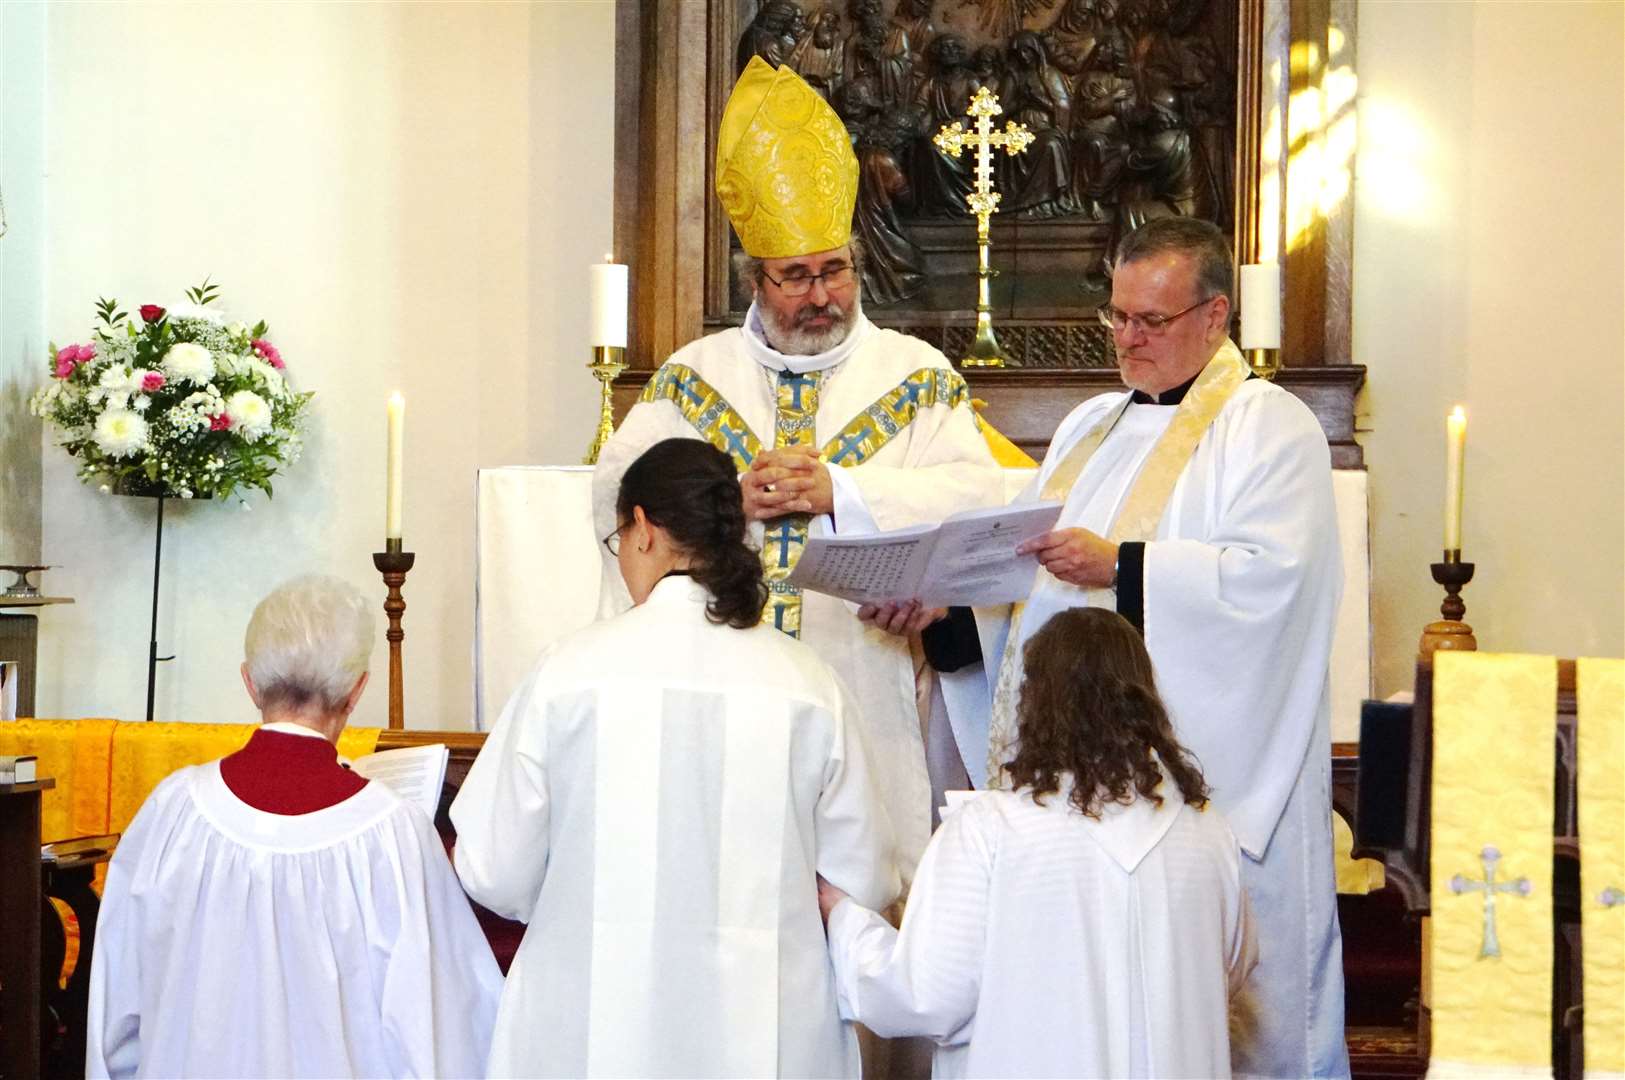 Bishop Mark Strange in the act of ordaining Ellie Charman.